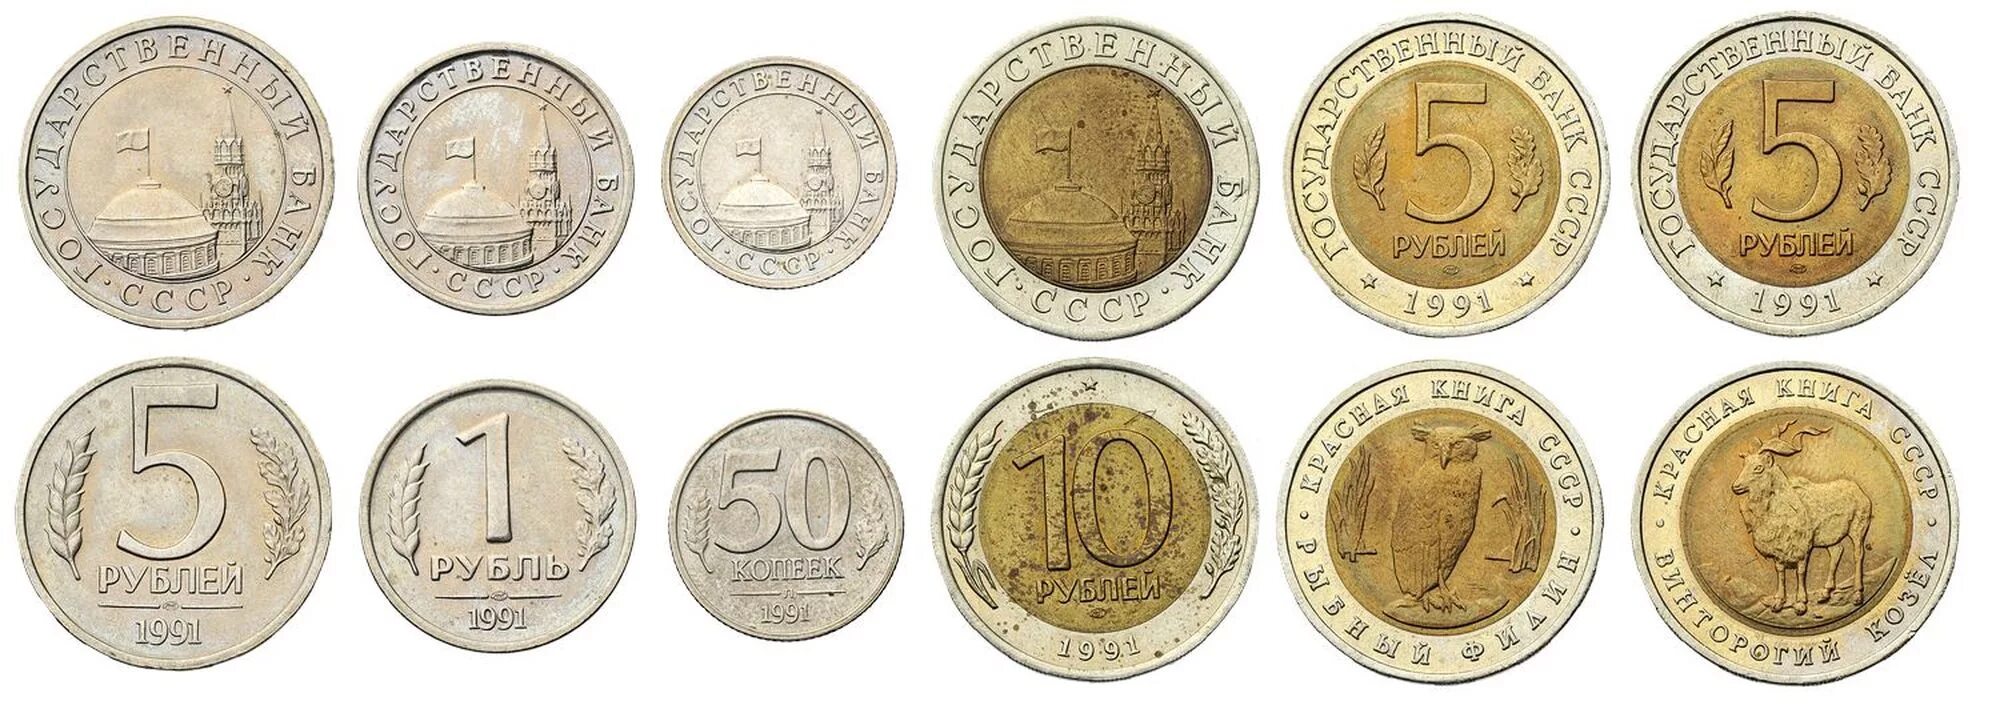 5 95 в рублях. Монета 10 рублей 1991. Белая десятка (Биметалл) 1991г ЛМД цена.